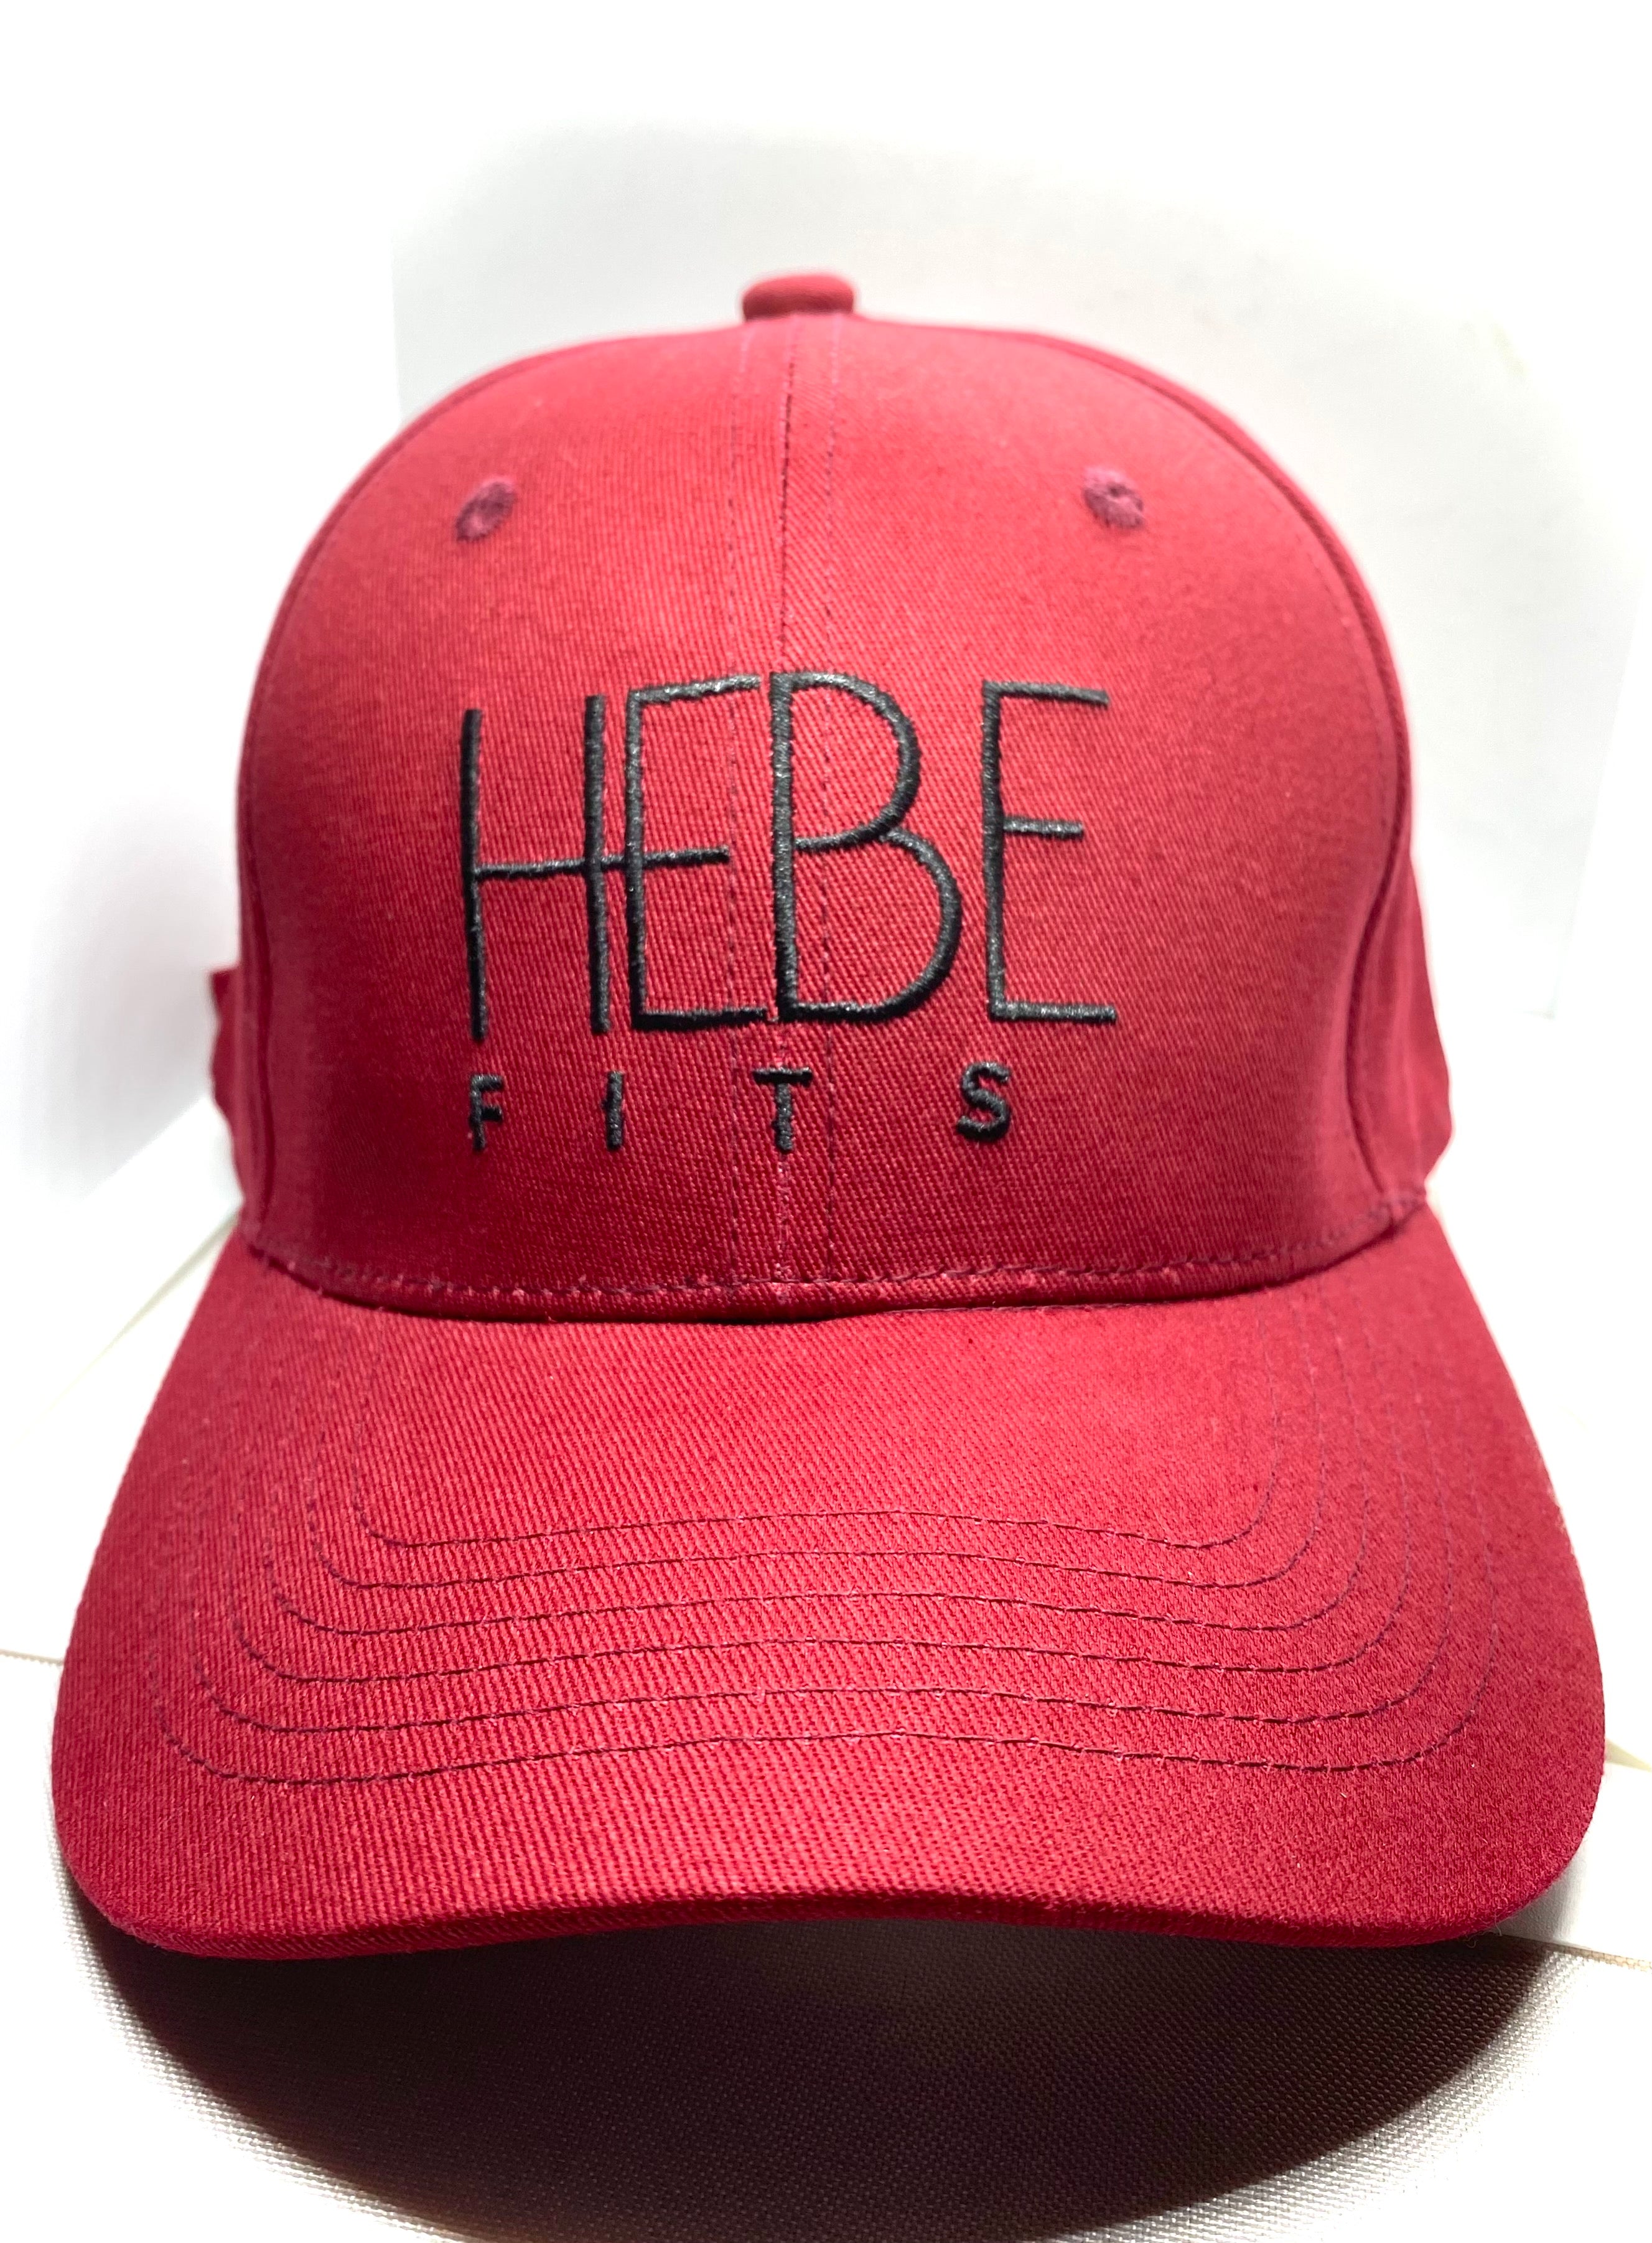 HEBE Hats - Hebe Fits